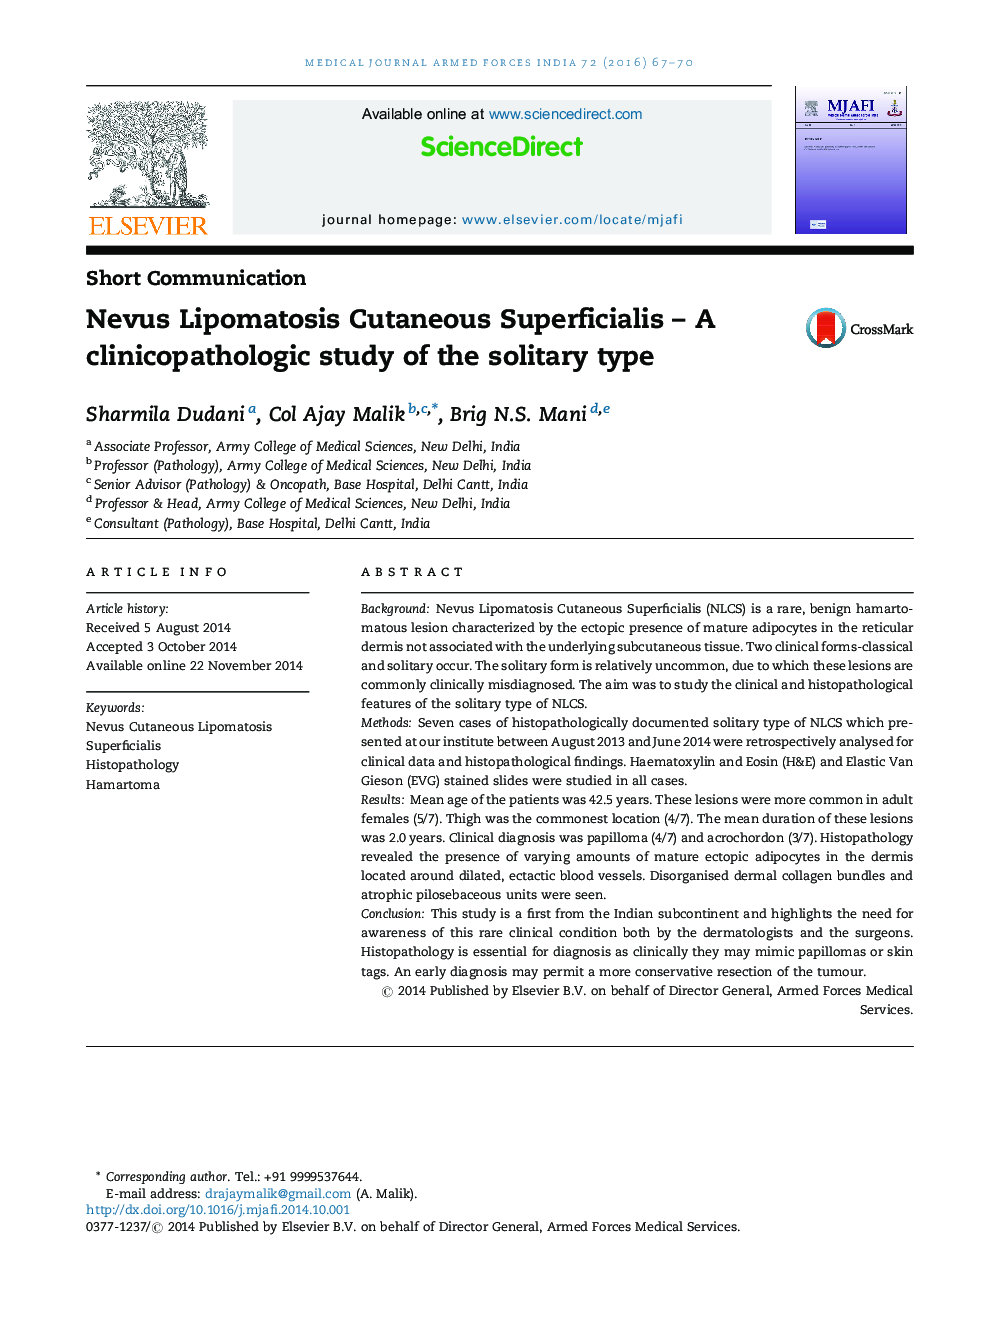 Nevus Lipomatosis Cutaneous Superficialis – A clinicopathologic study of the solitary type